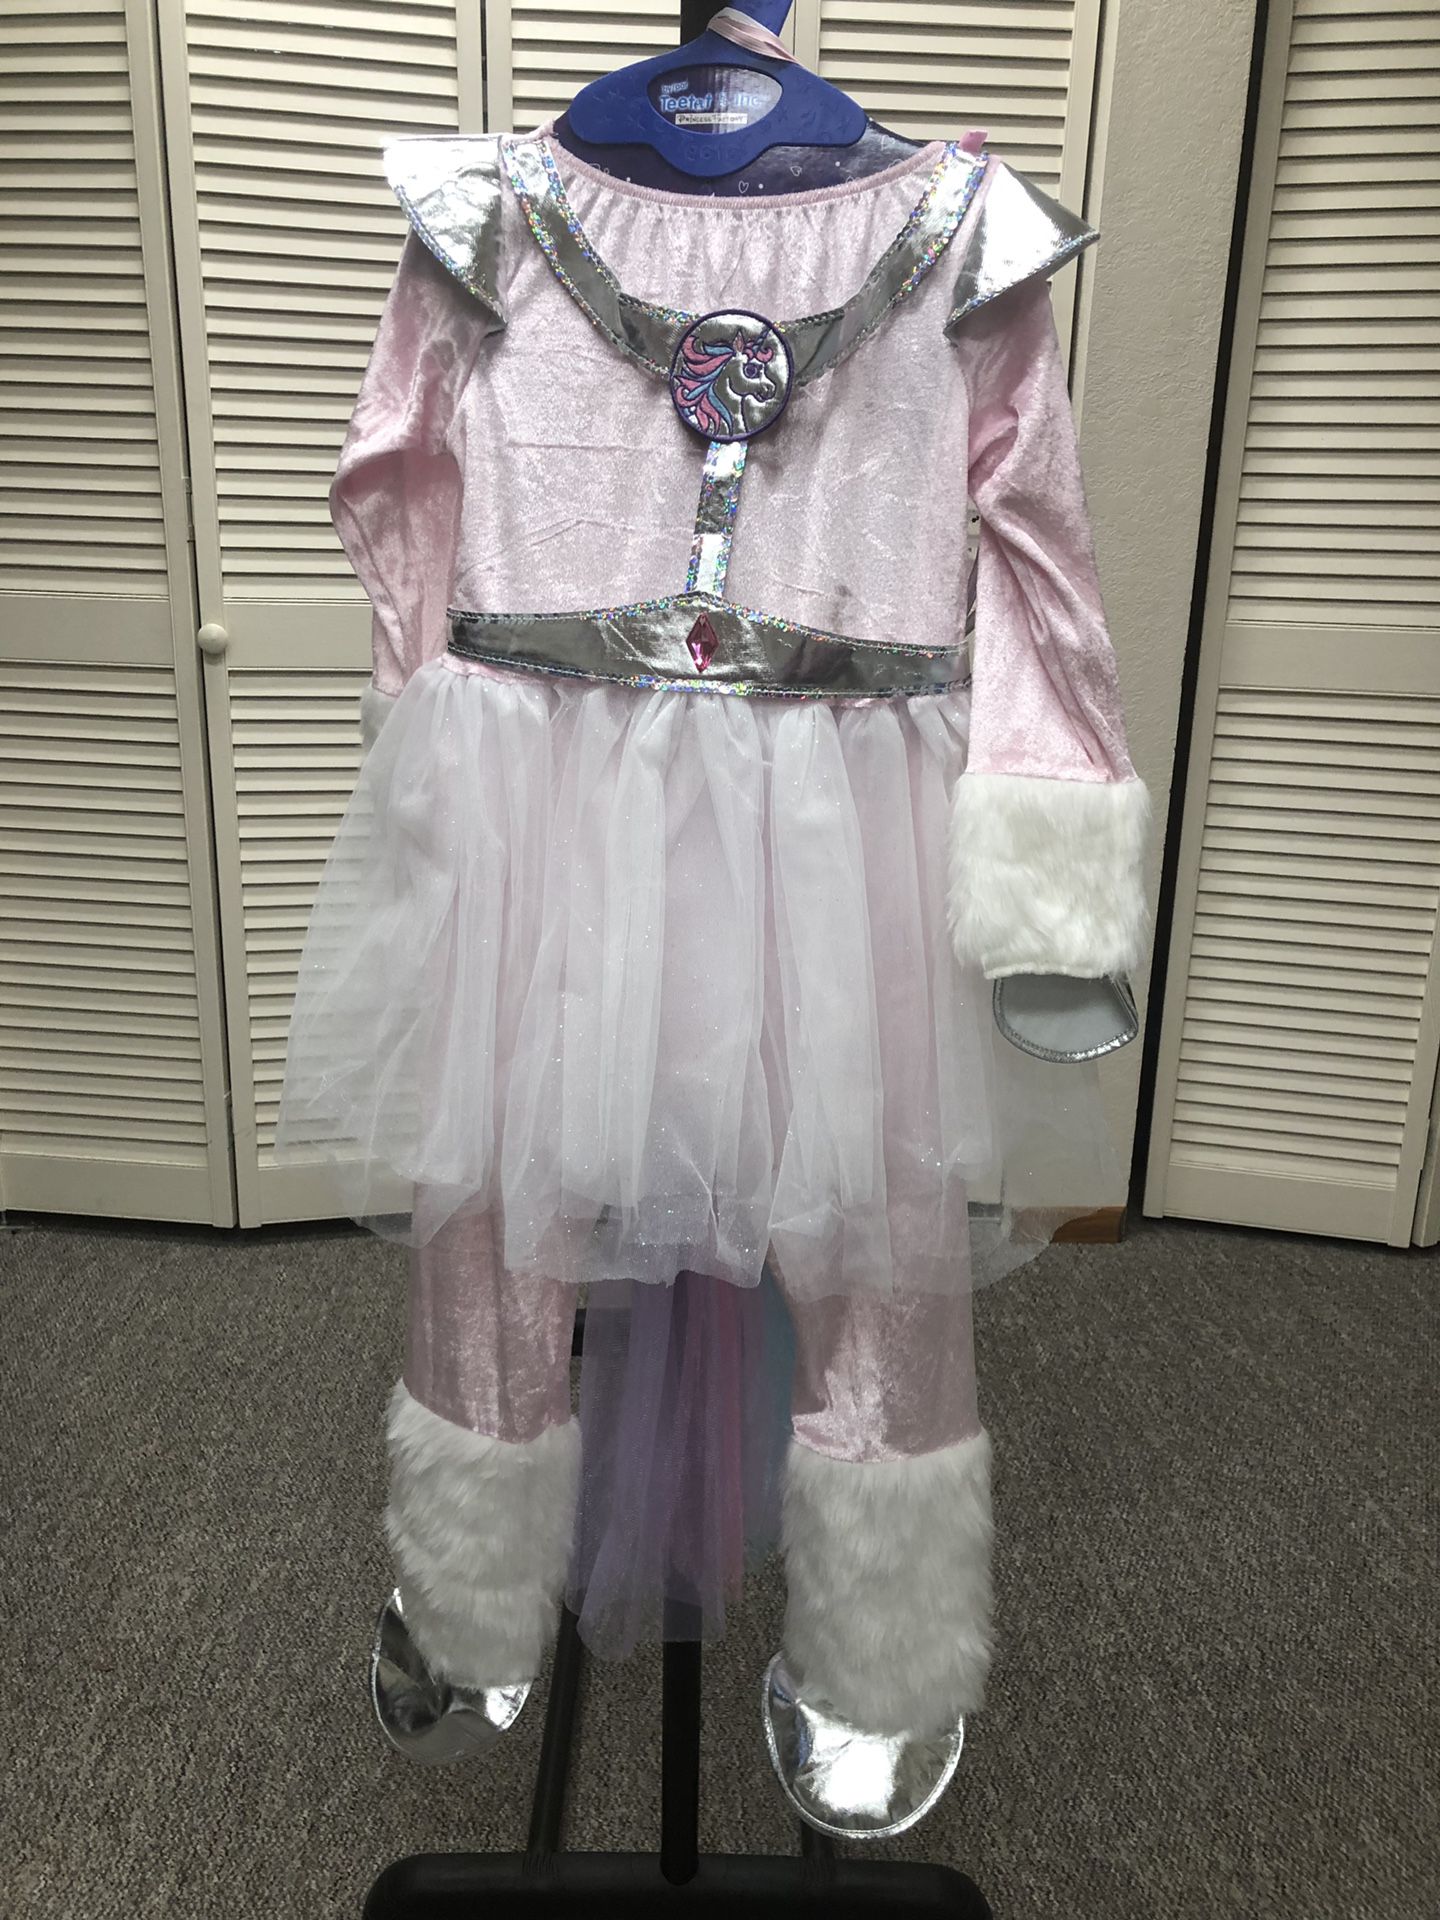 New winged unicorn costume